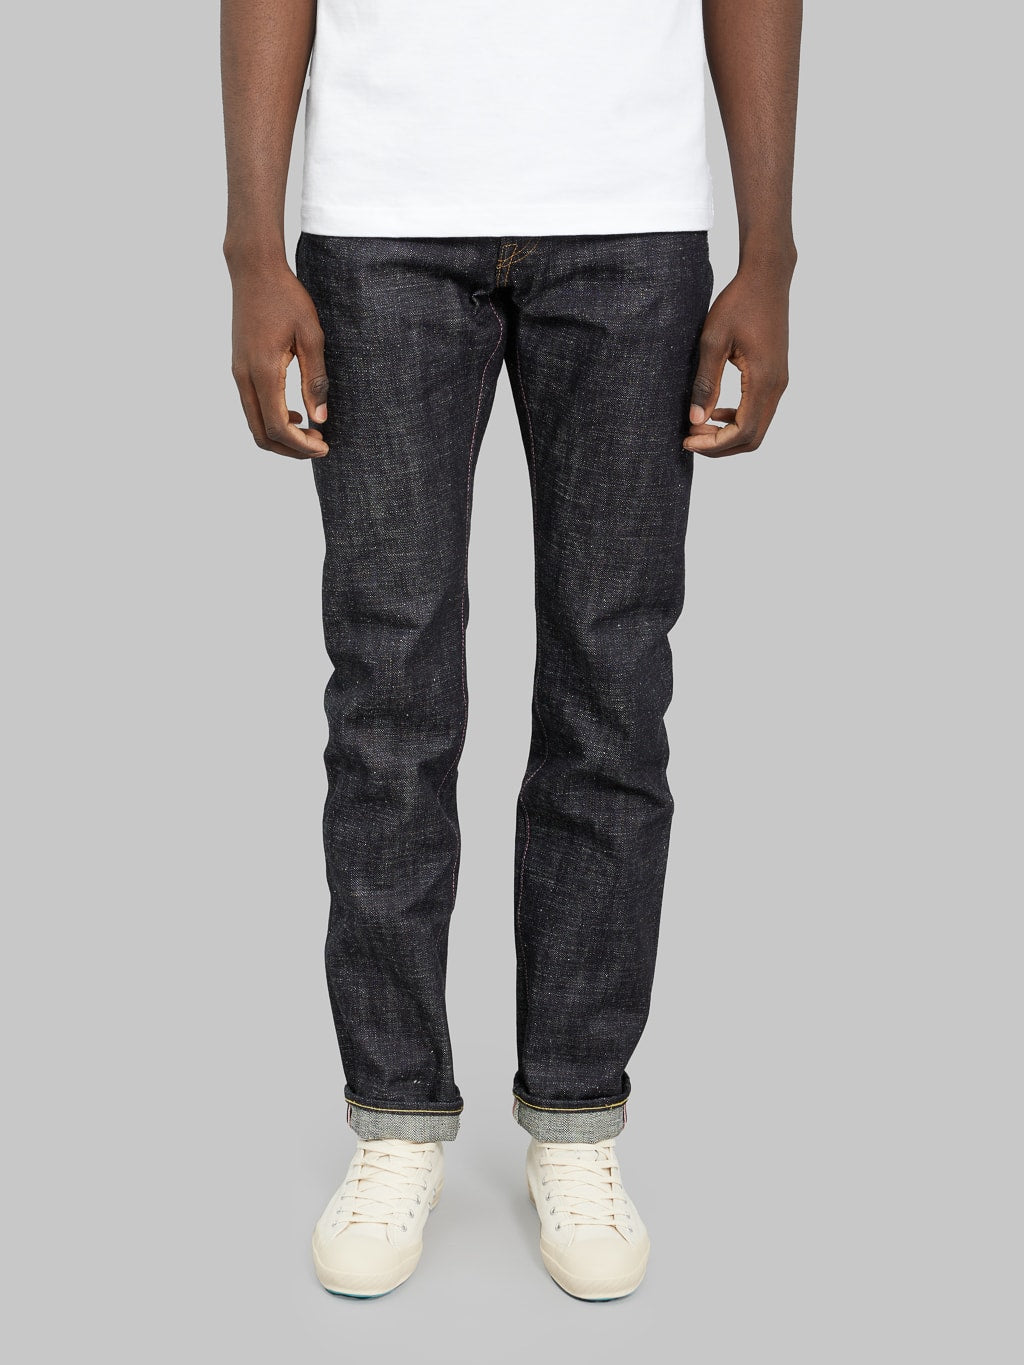 momotaro jeans 0605 82 16oz texture denim natural tapered front fit